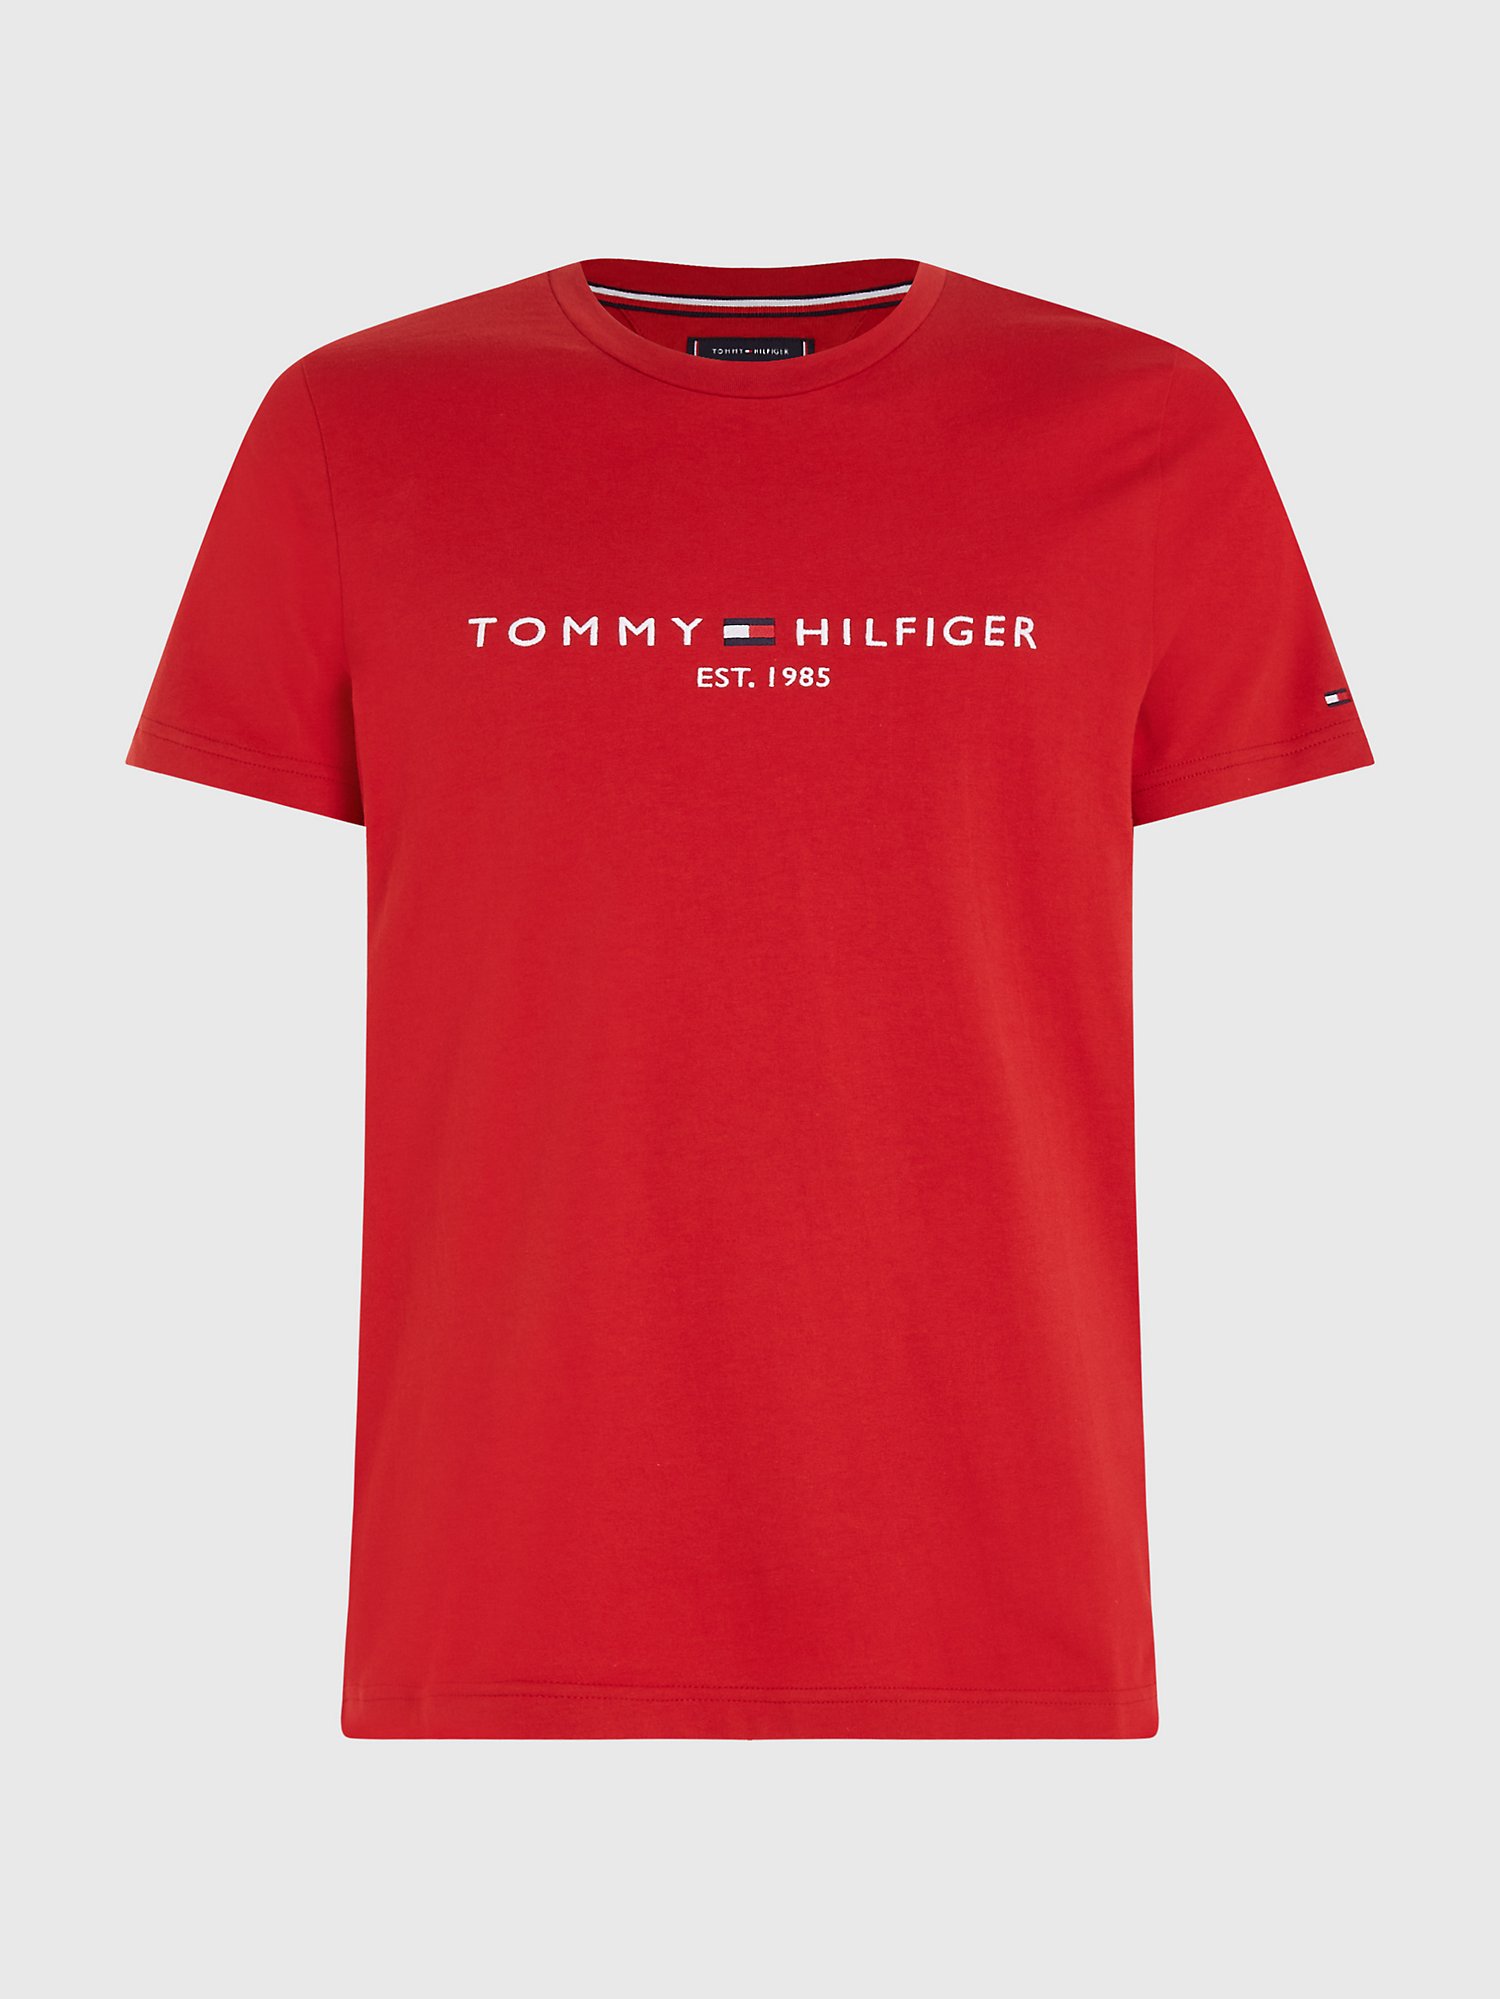 Big and Hilfiger Logo T-Shirt | Tommy